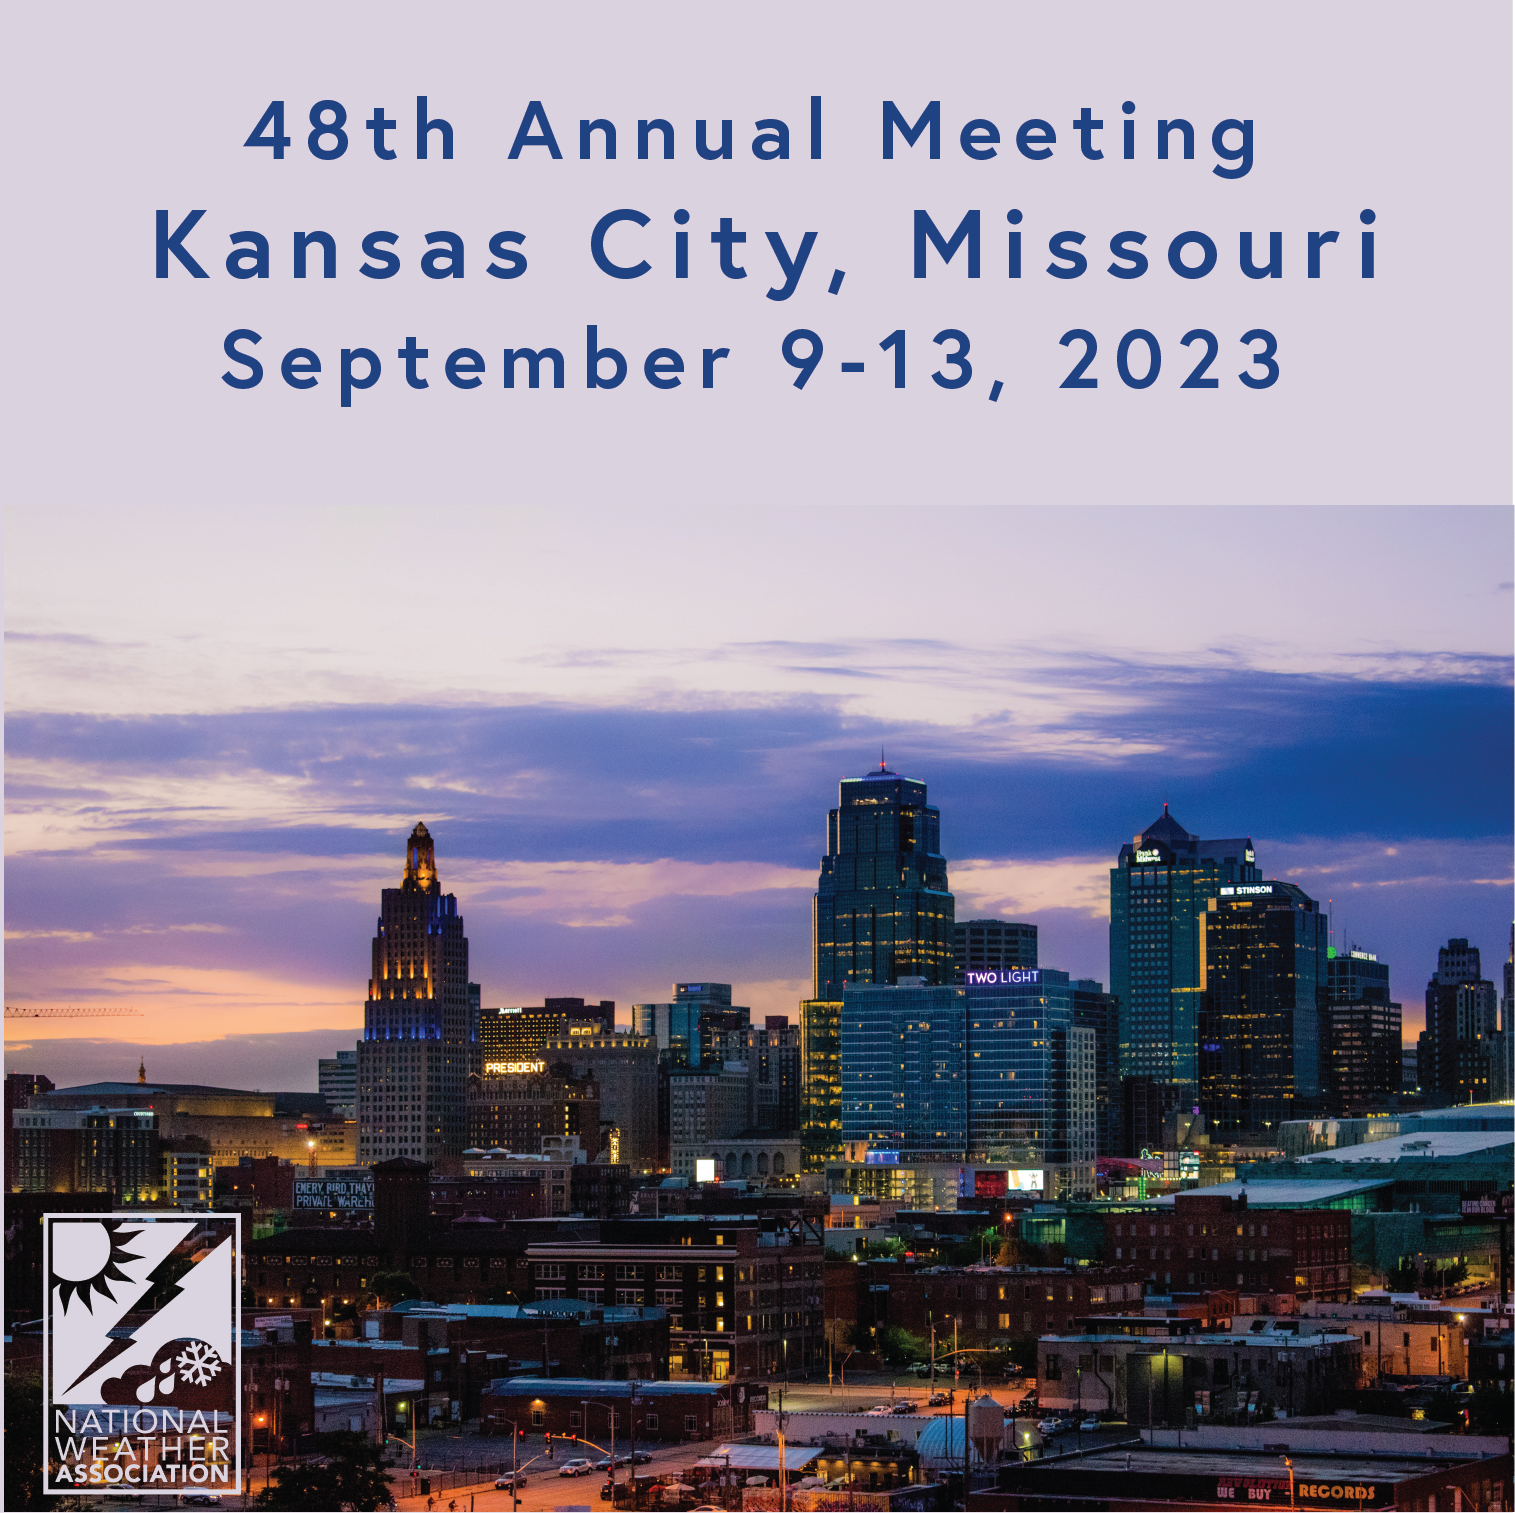 48th Annual Meeting Kansas City Missouri September 9-13